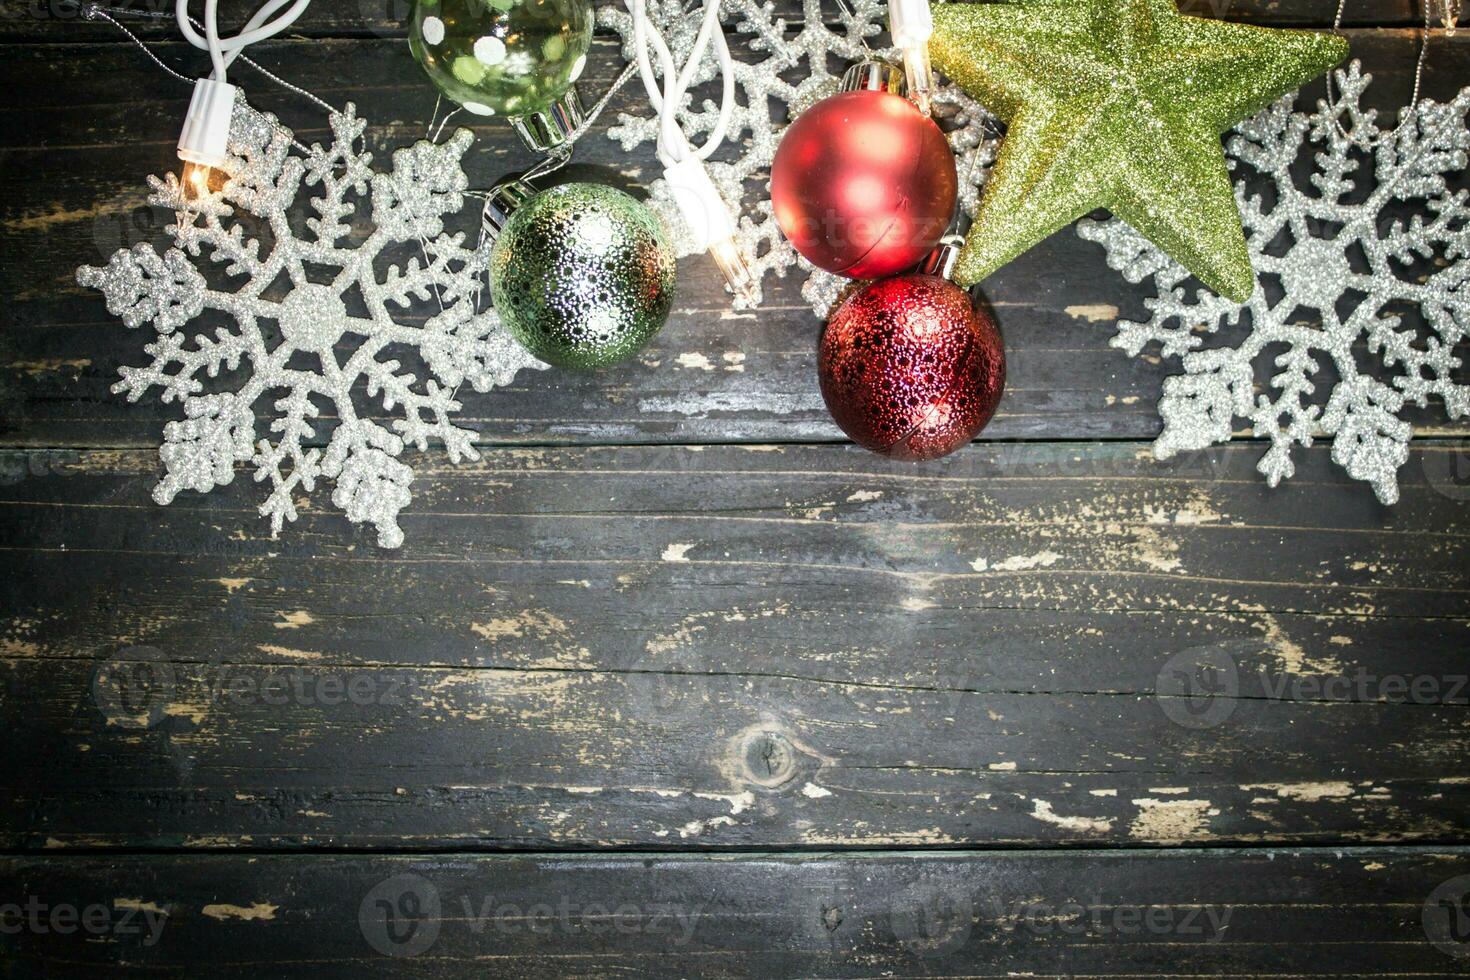 Navidad fiesta adornos en un oscuro madera antecedentes. foto